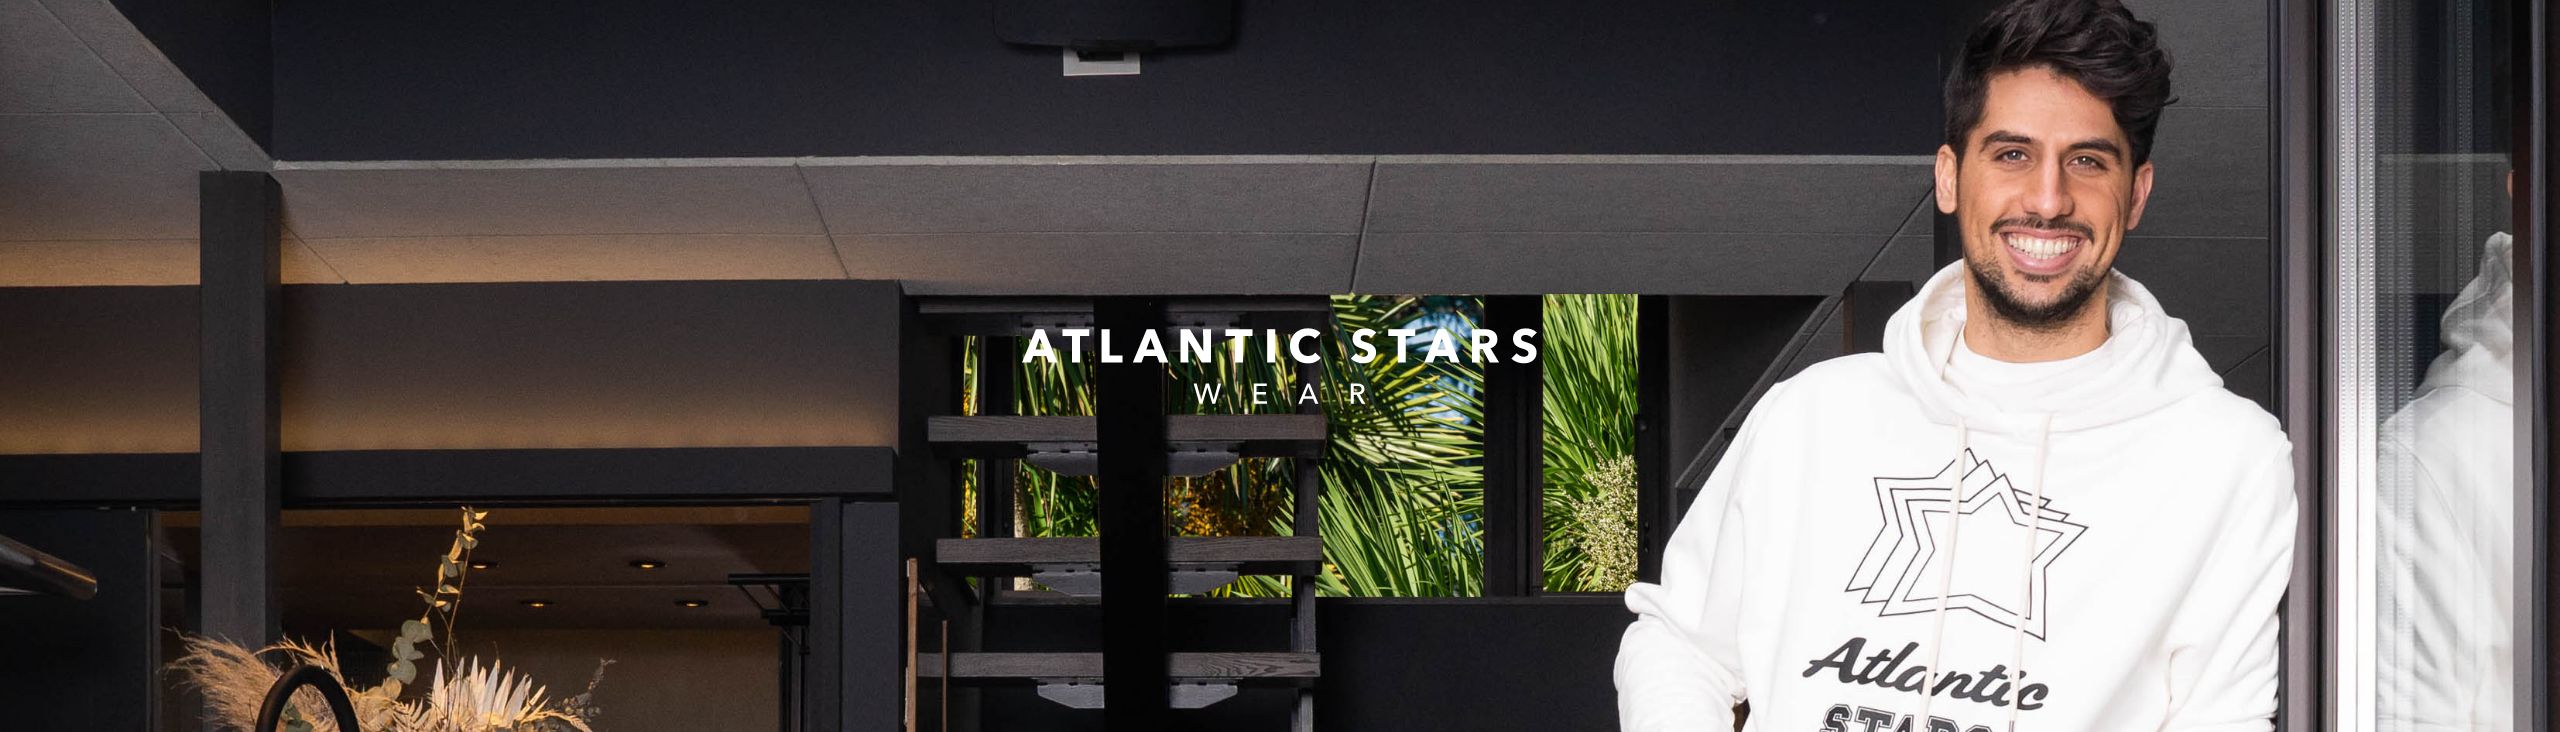 ATLANTIC STARS WEAR – アトランティック スターズ ジャパン 公式通販